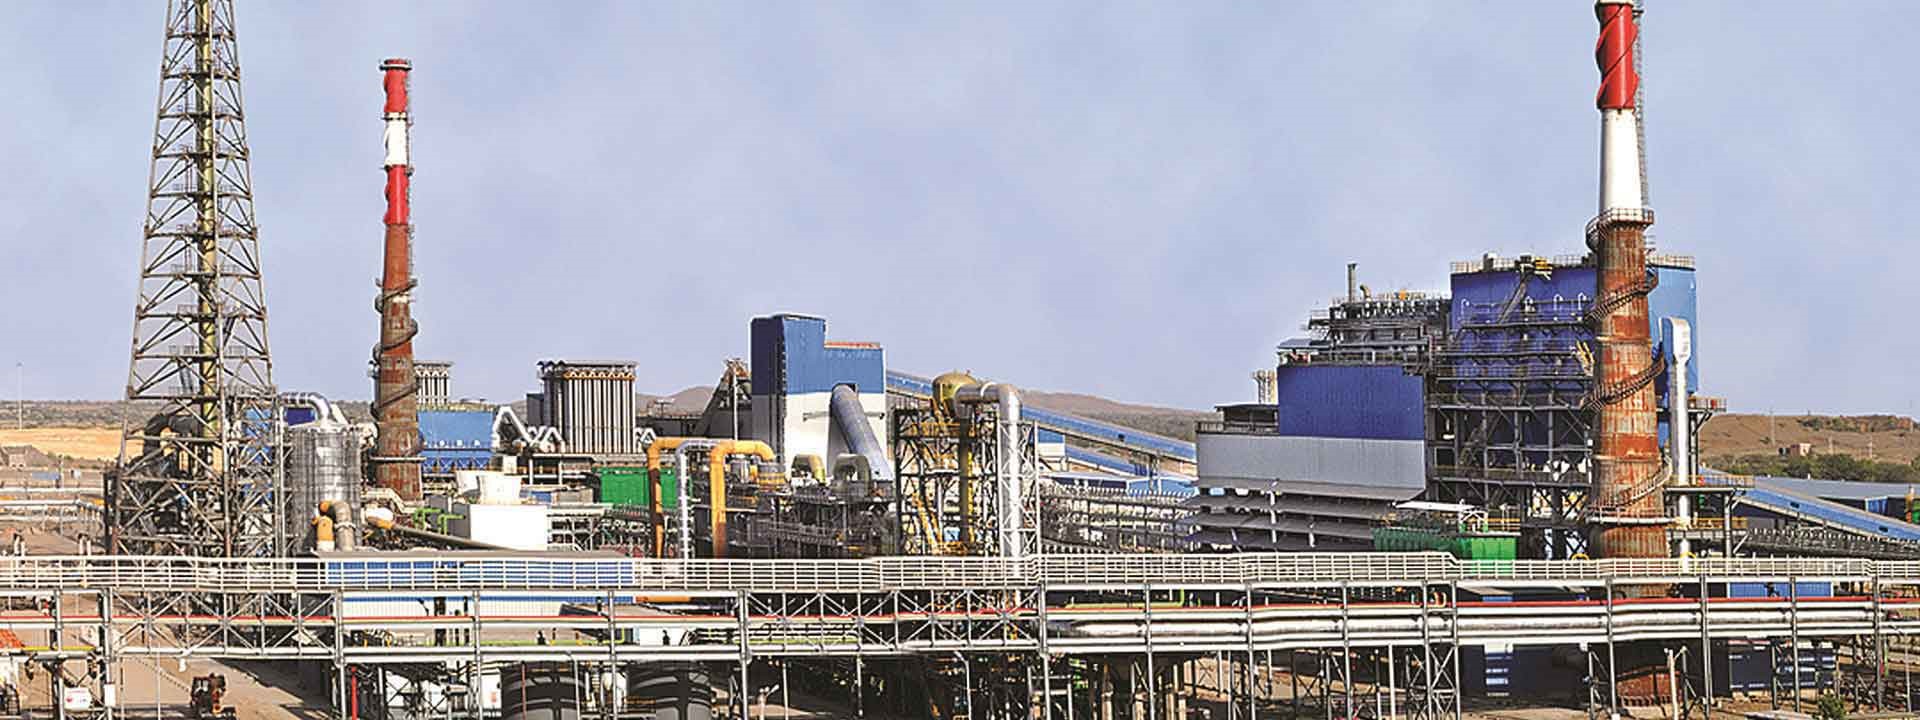 Lead Zinc Beneficiation plant in Udaipur- L&T Construction